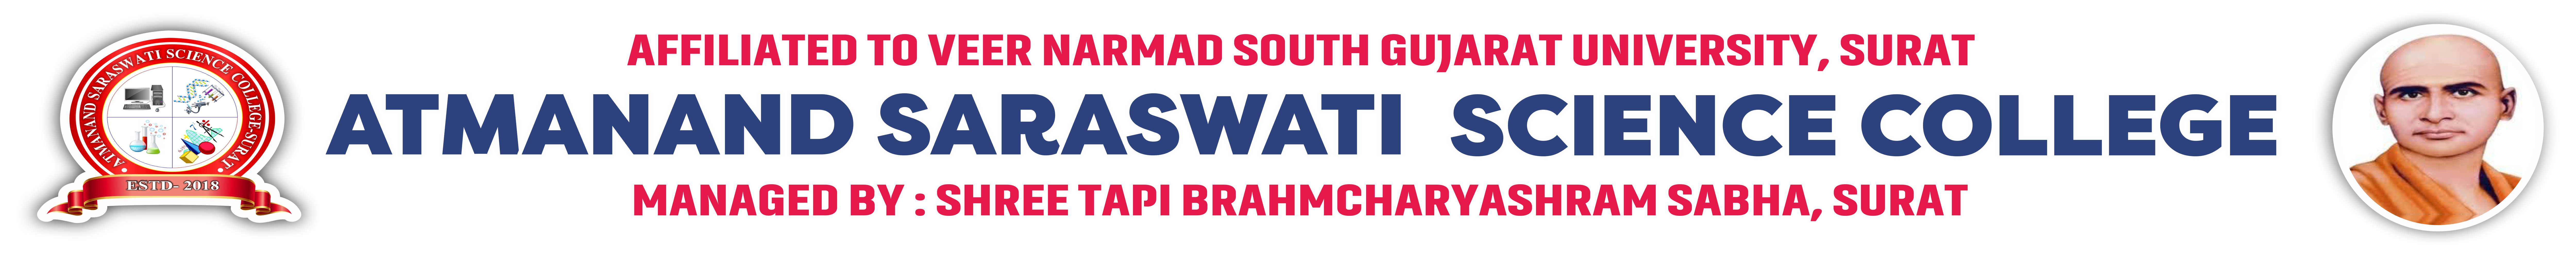 Atmanand saraswati science college Logo